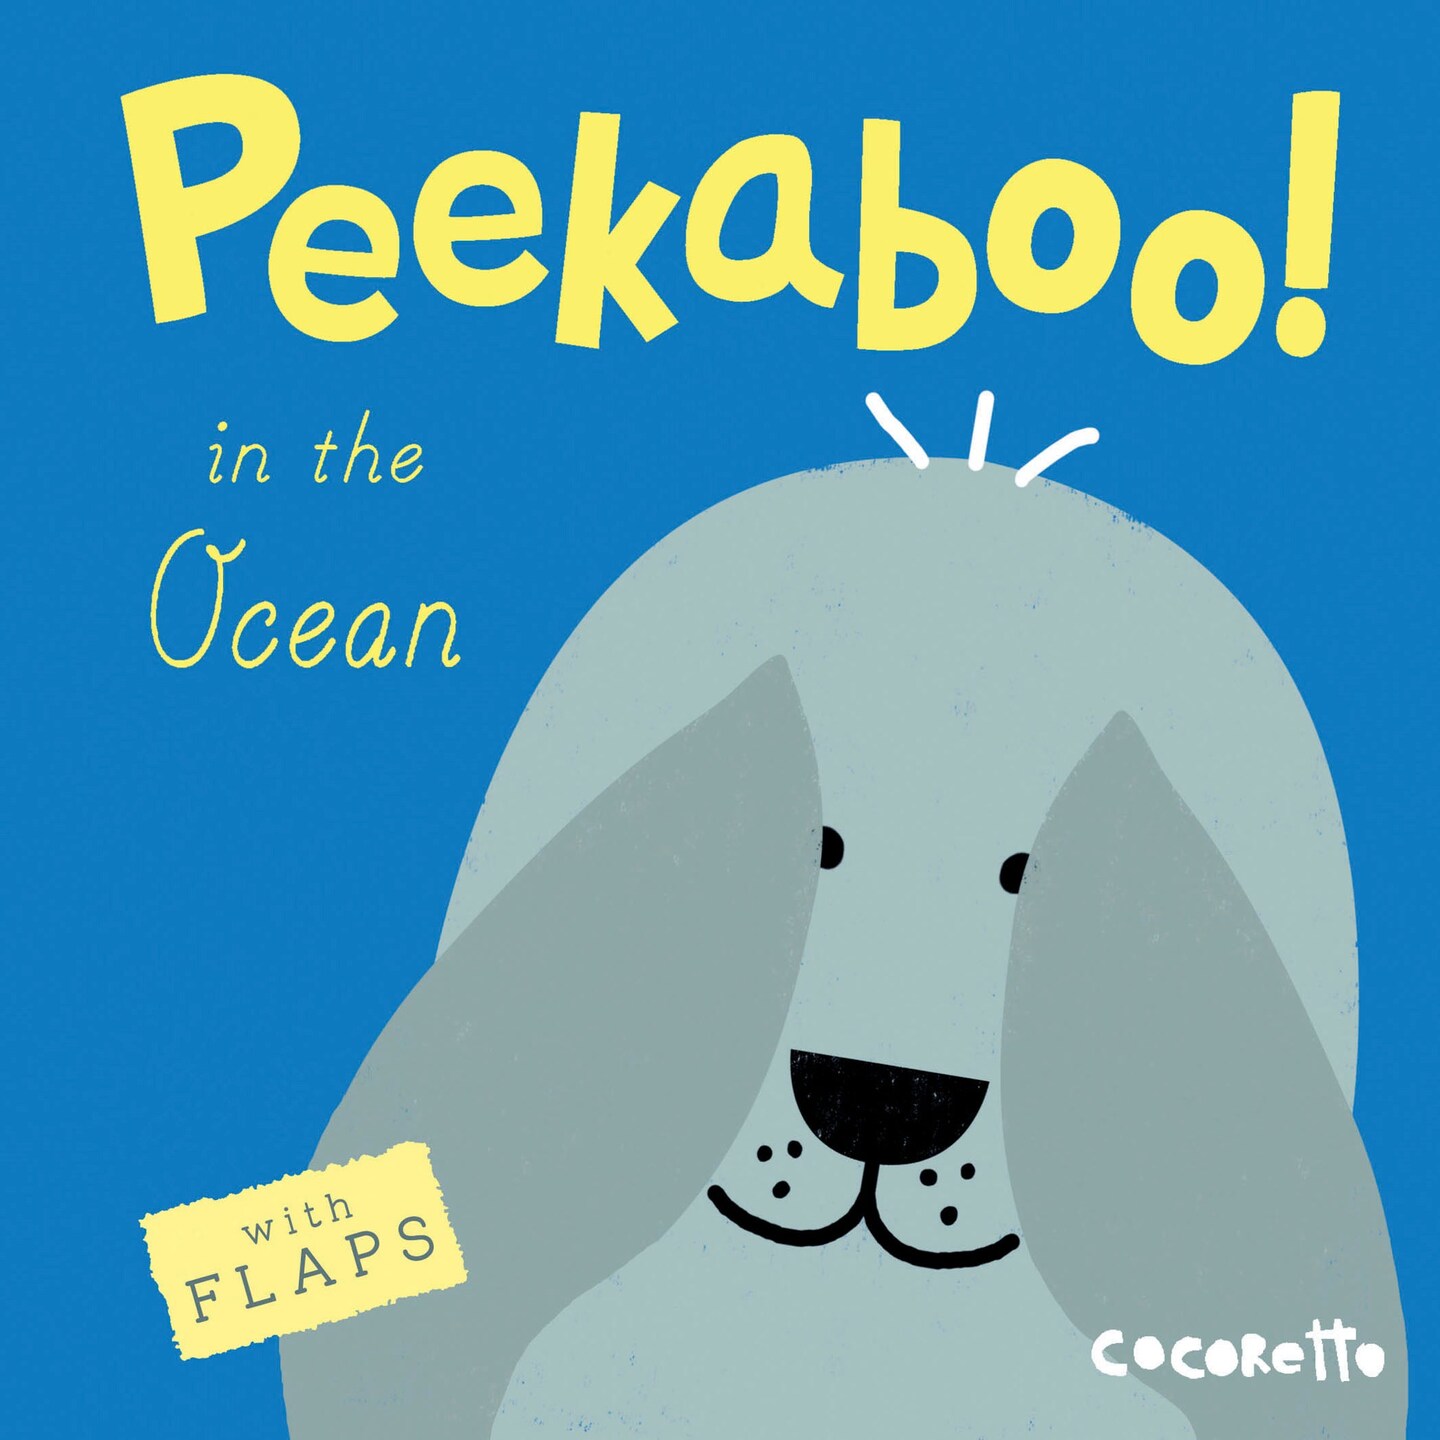 Peekaboo! Board Book, In the Ocean